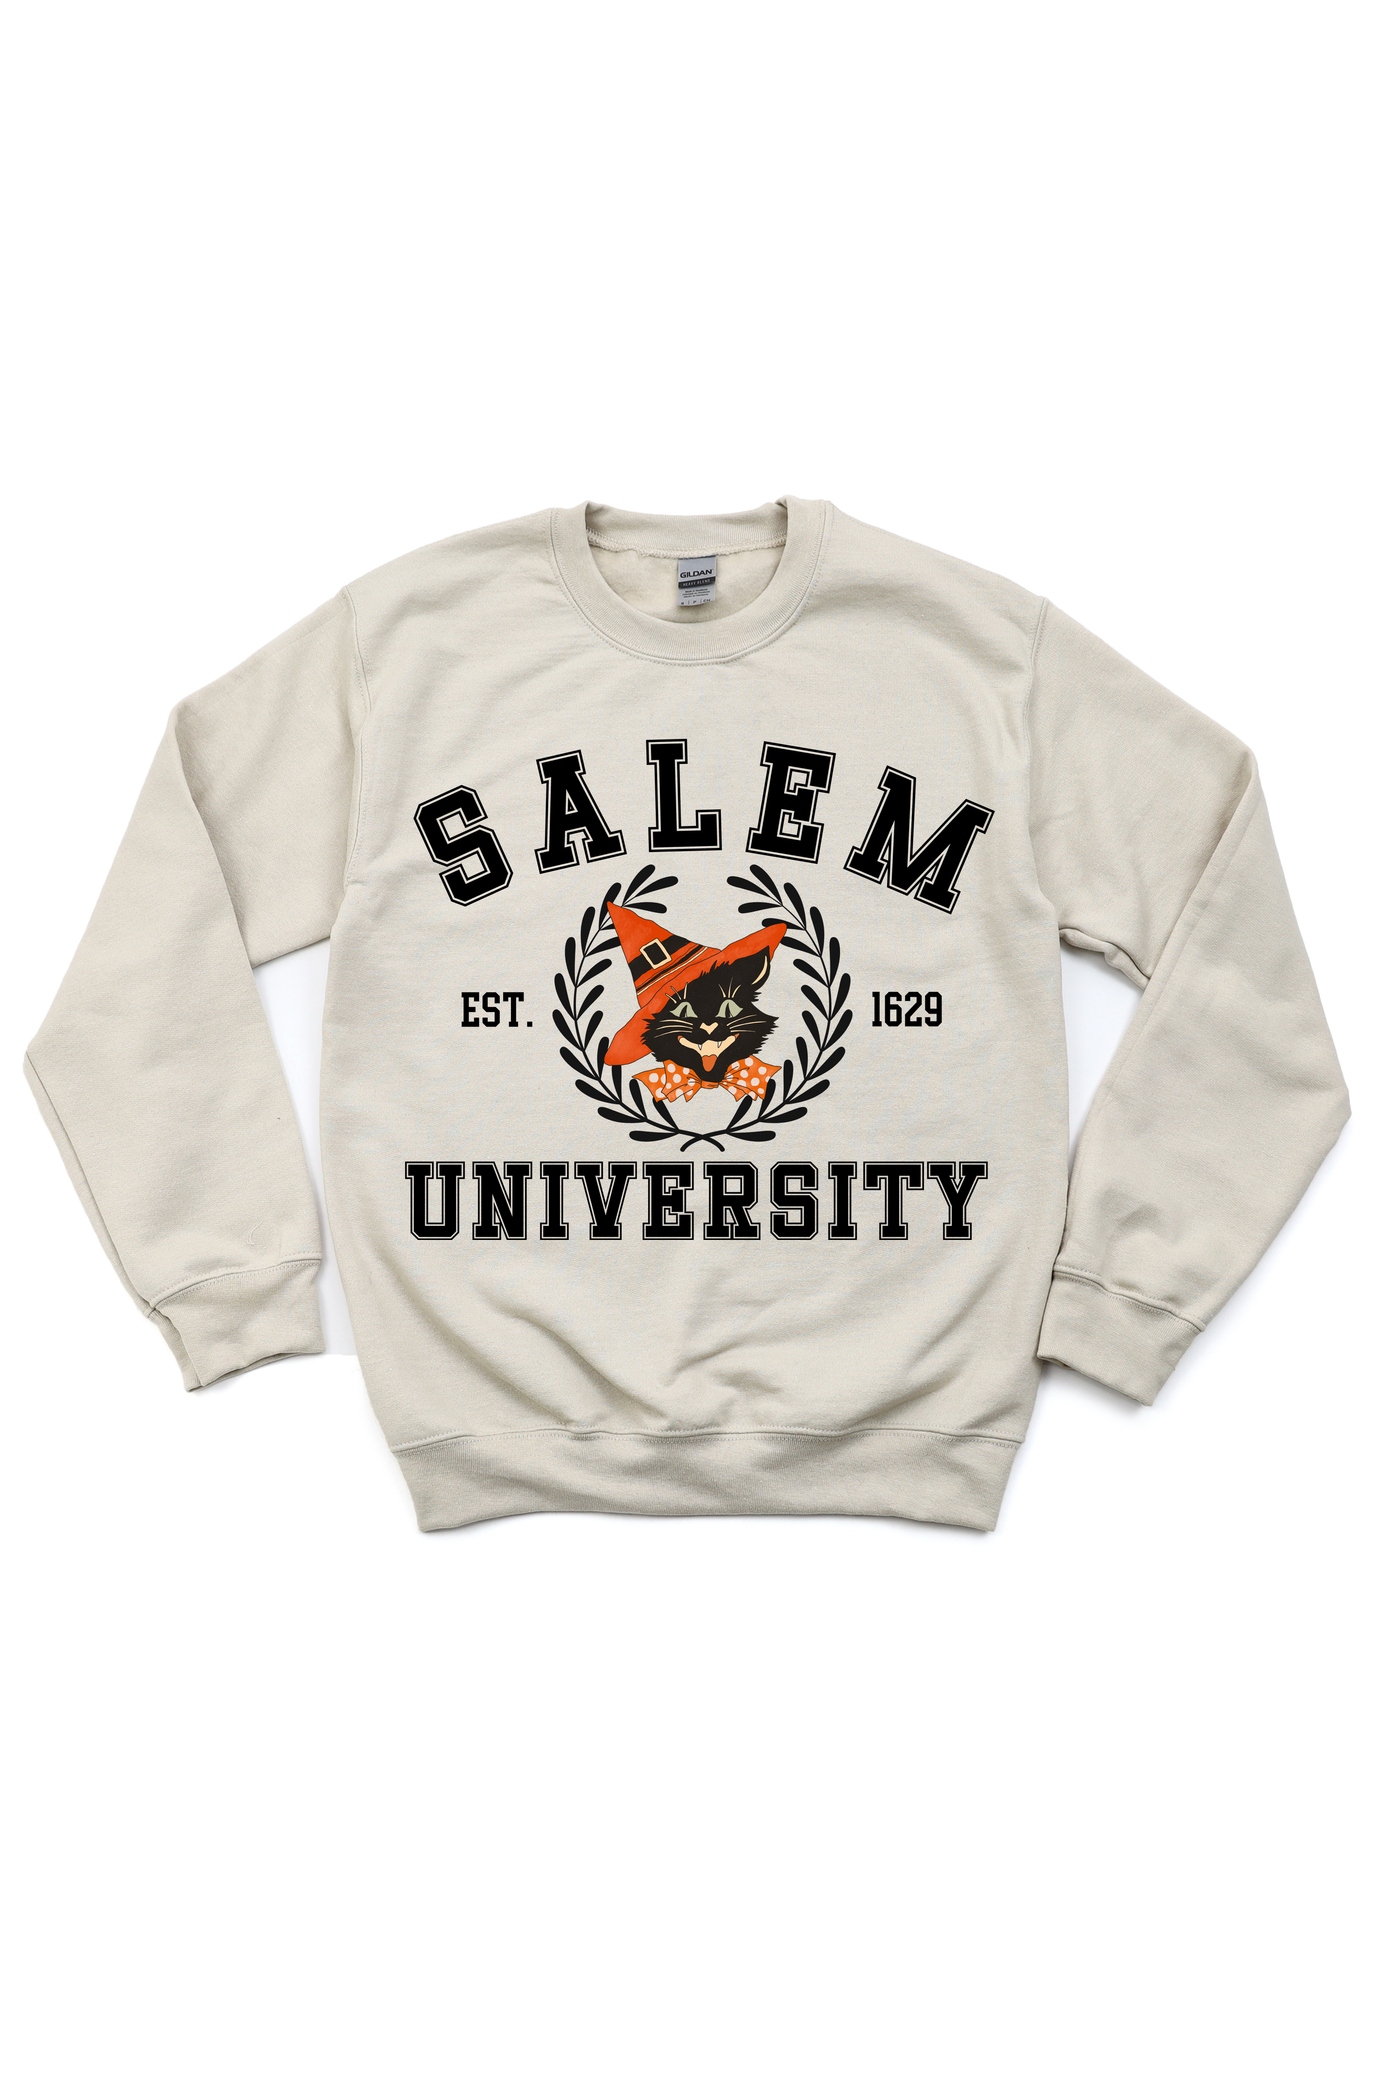 Black Cat Salem University Tee/Sweatshirt